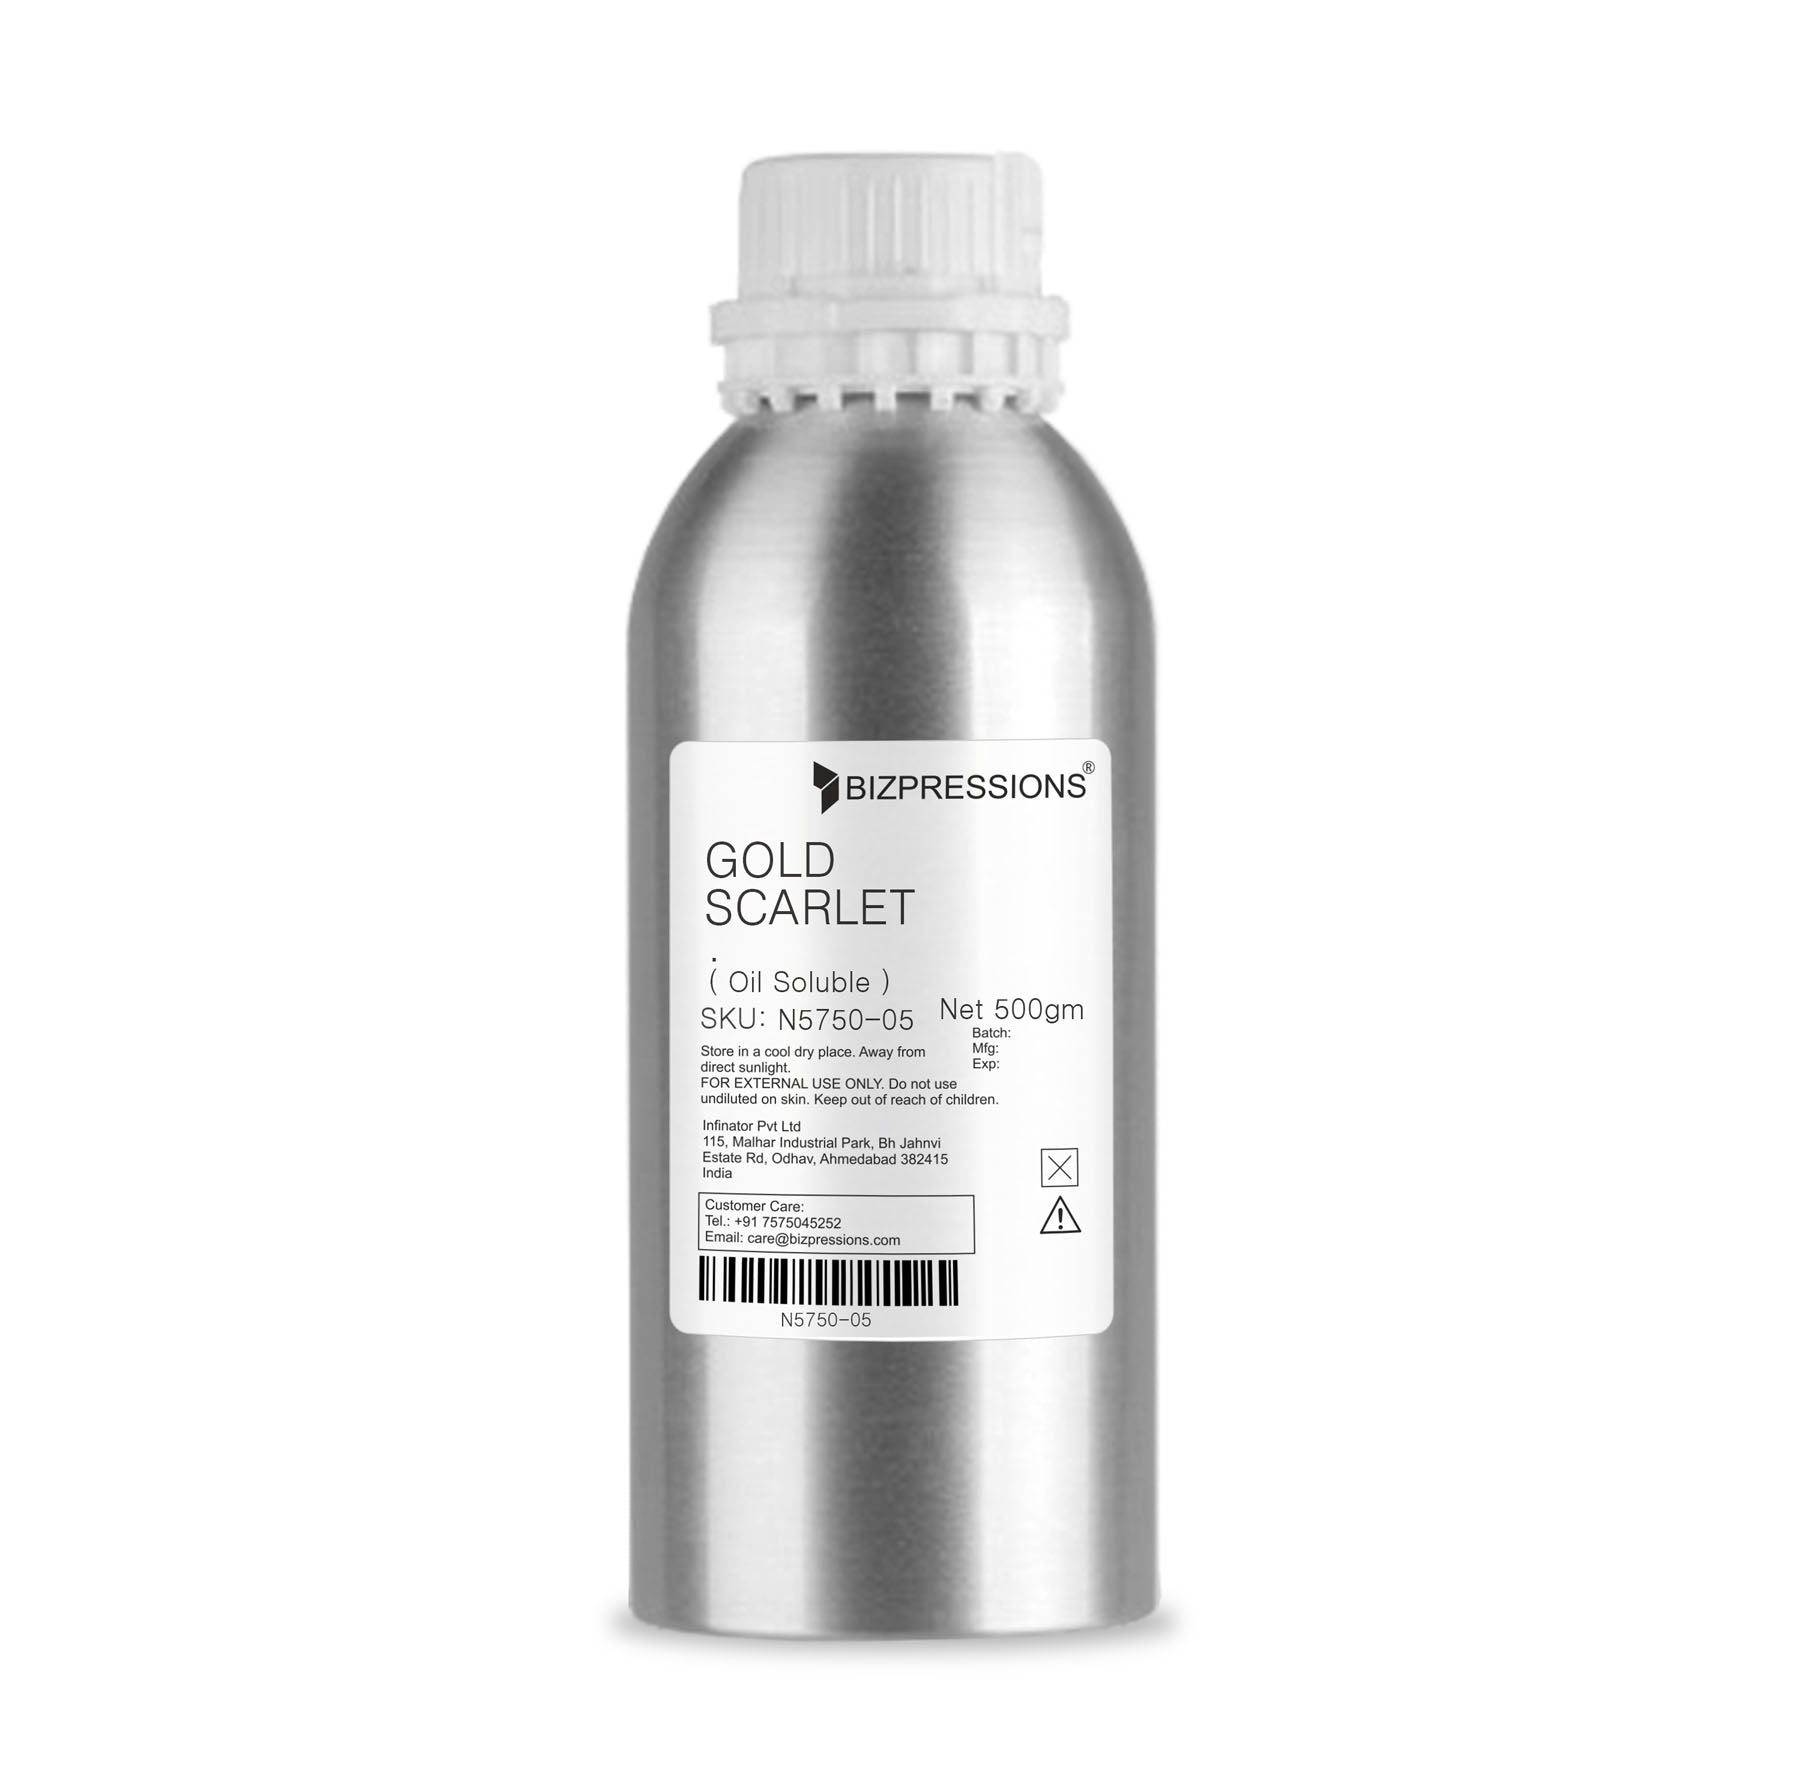 GOLD SCARLET - Fragrance ( Oil Soluble ) - 500 gm